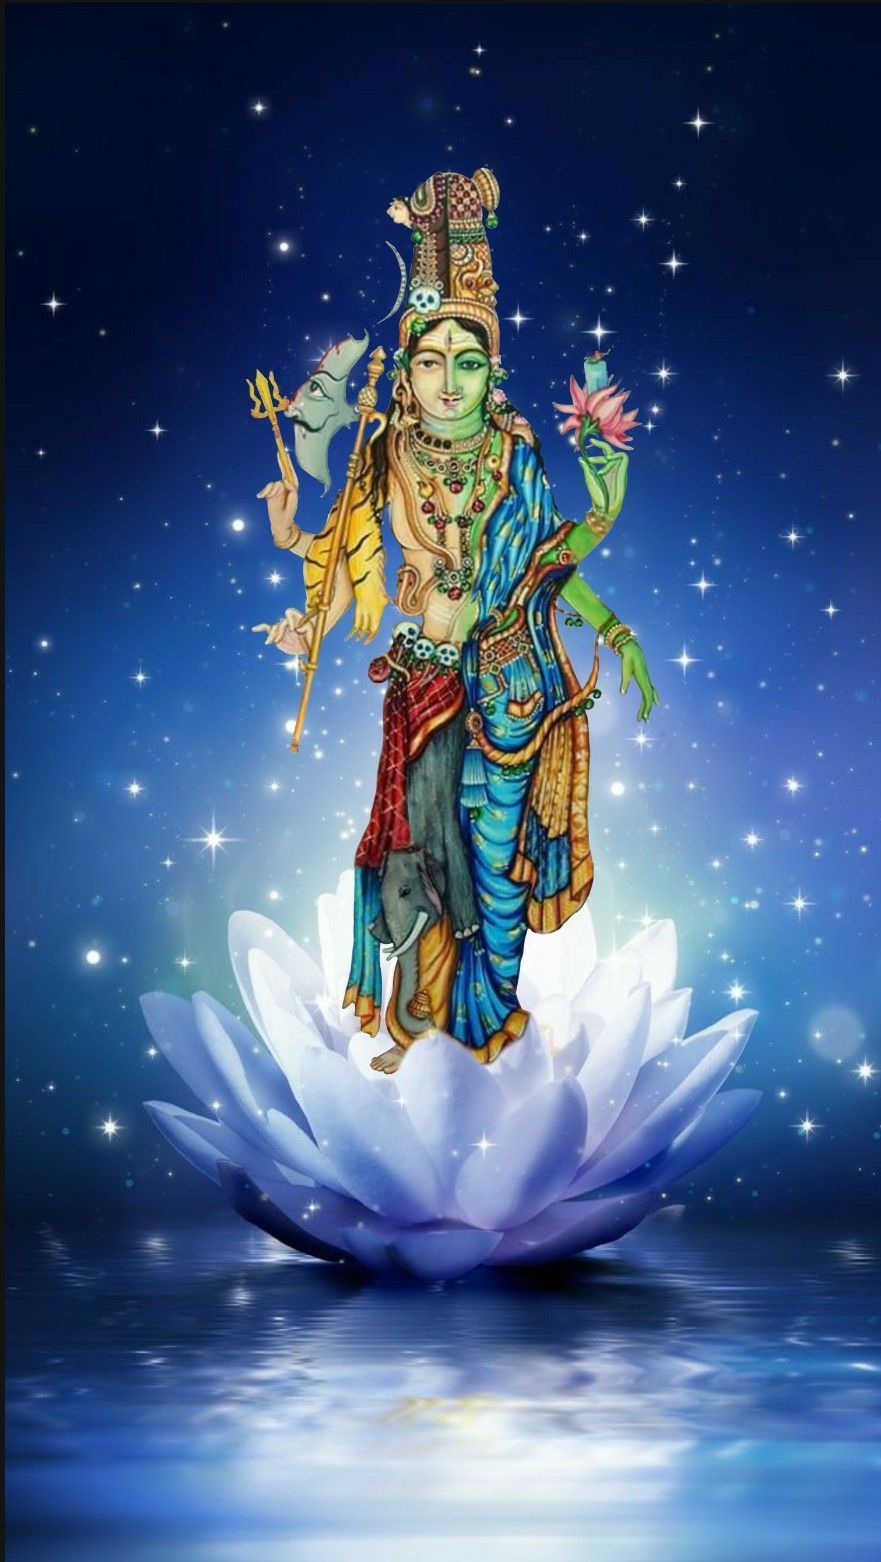 Lord Shiva and Parvati as ardhnarishwar on lotus in creative art